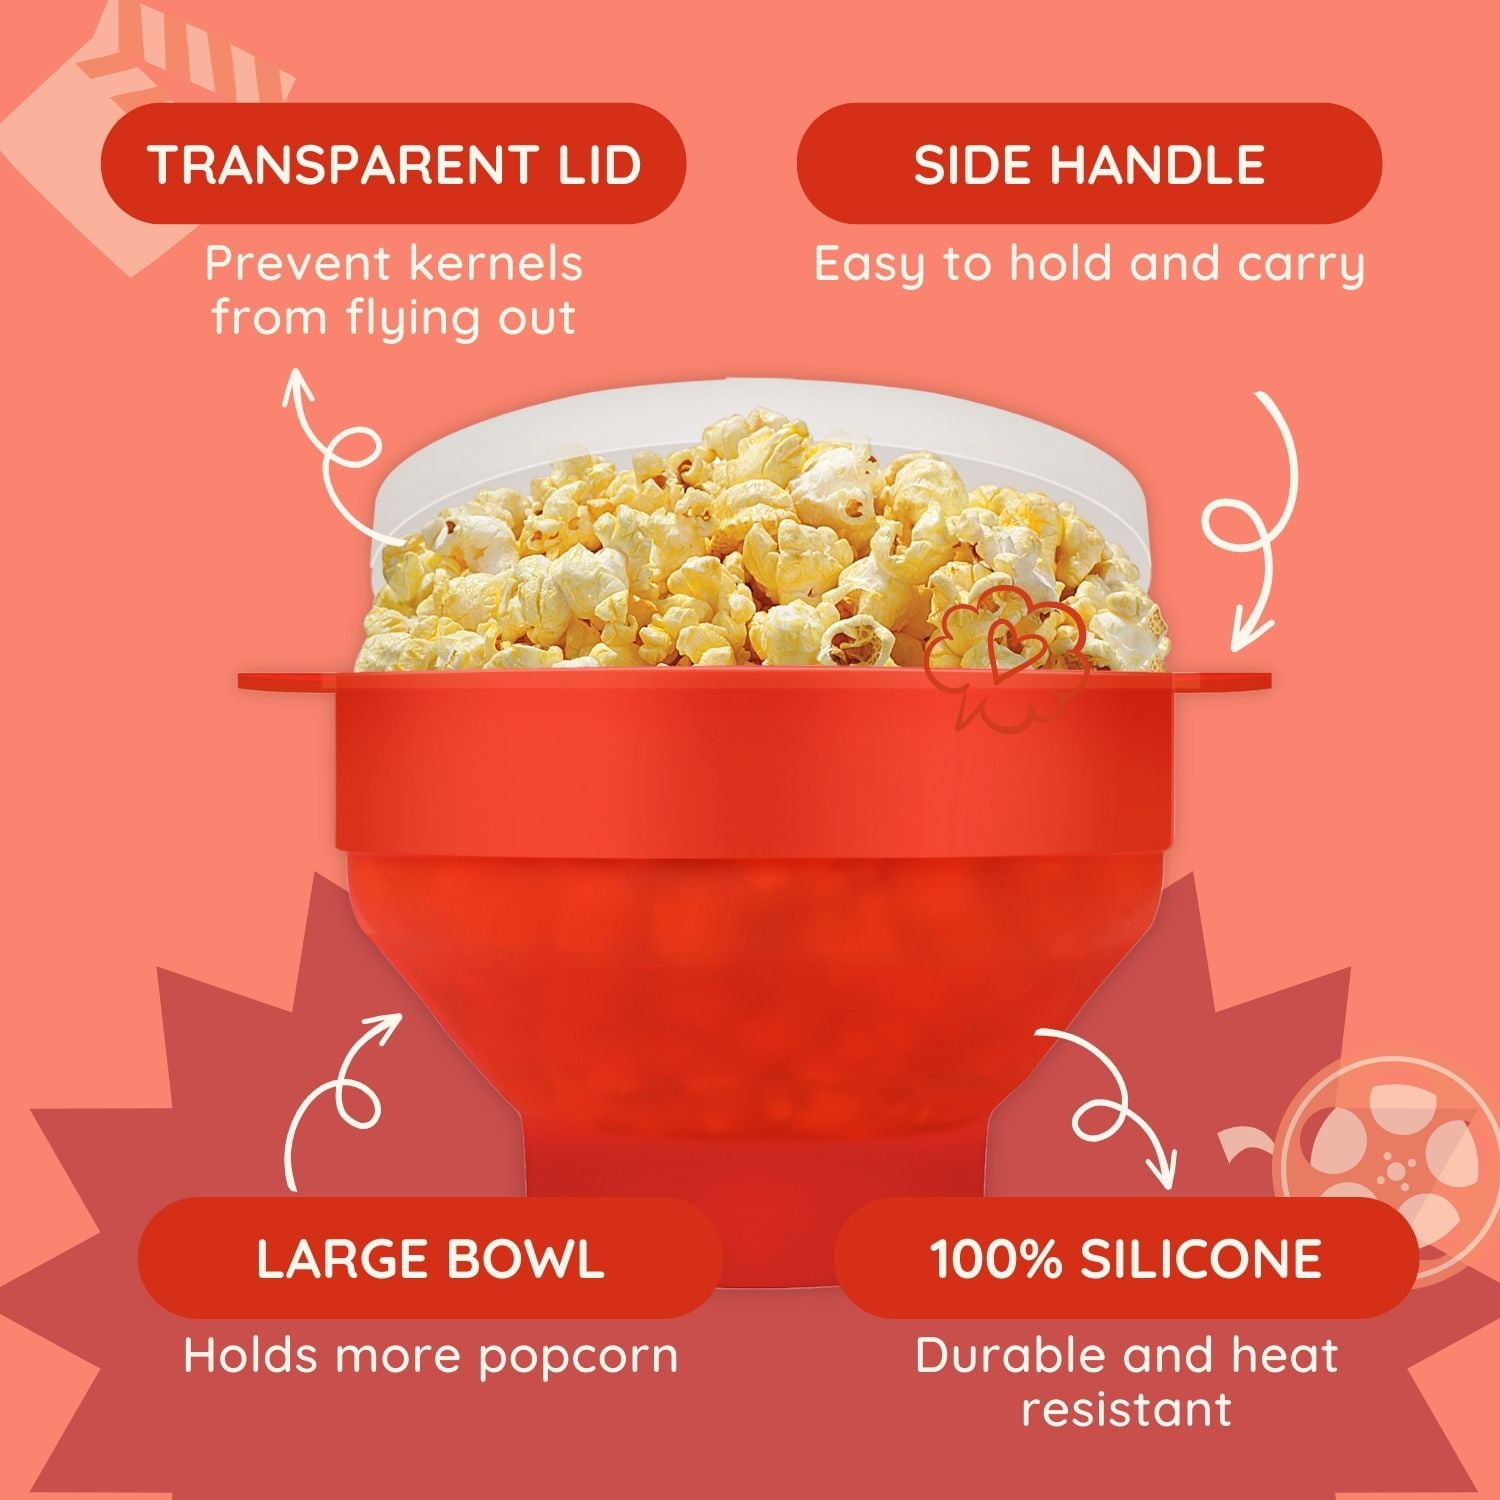 Salbree Microwave Popcorn Popper - Red 